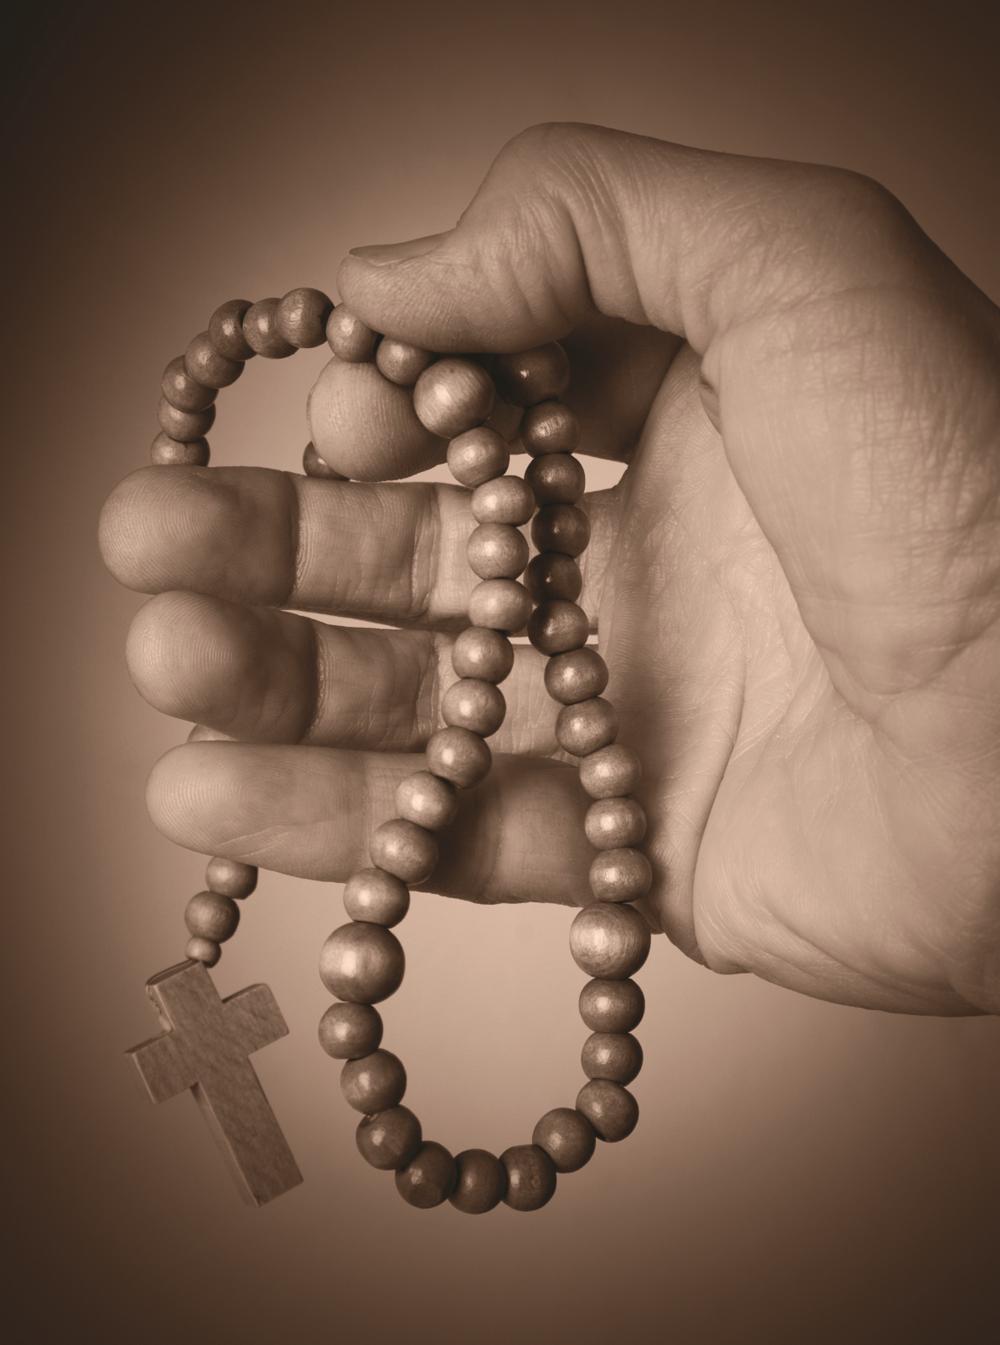 Praying the rosary